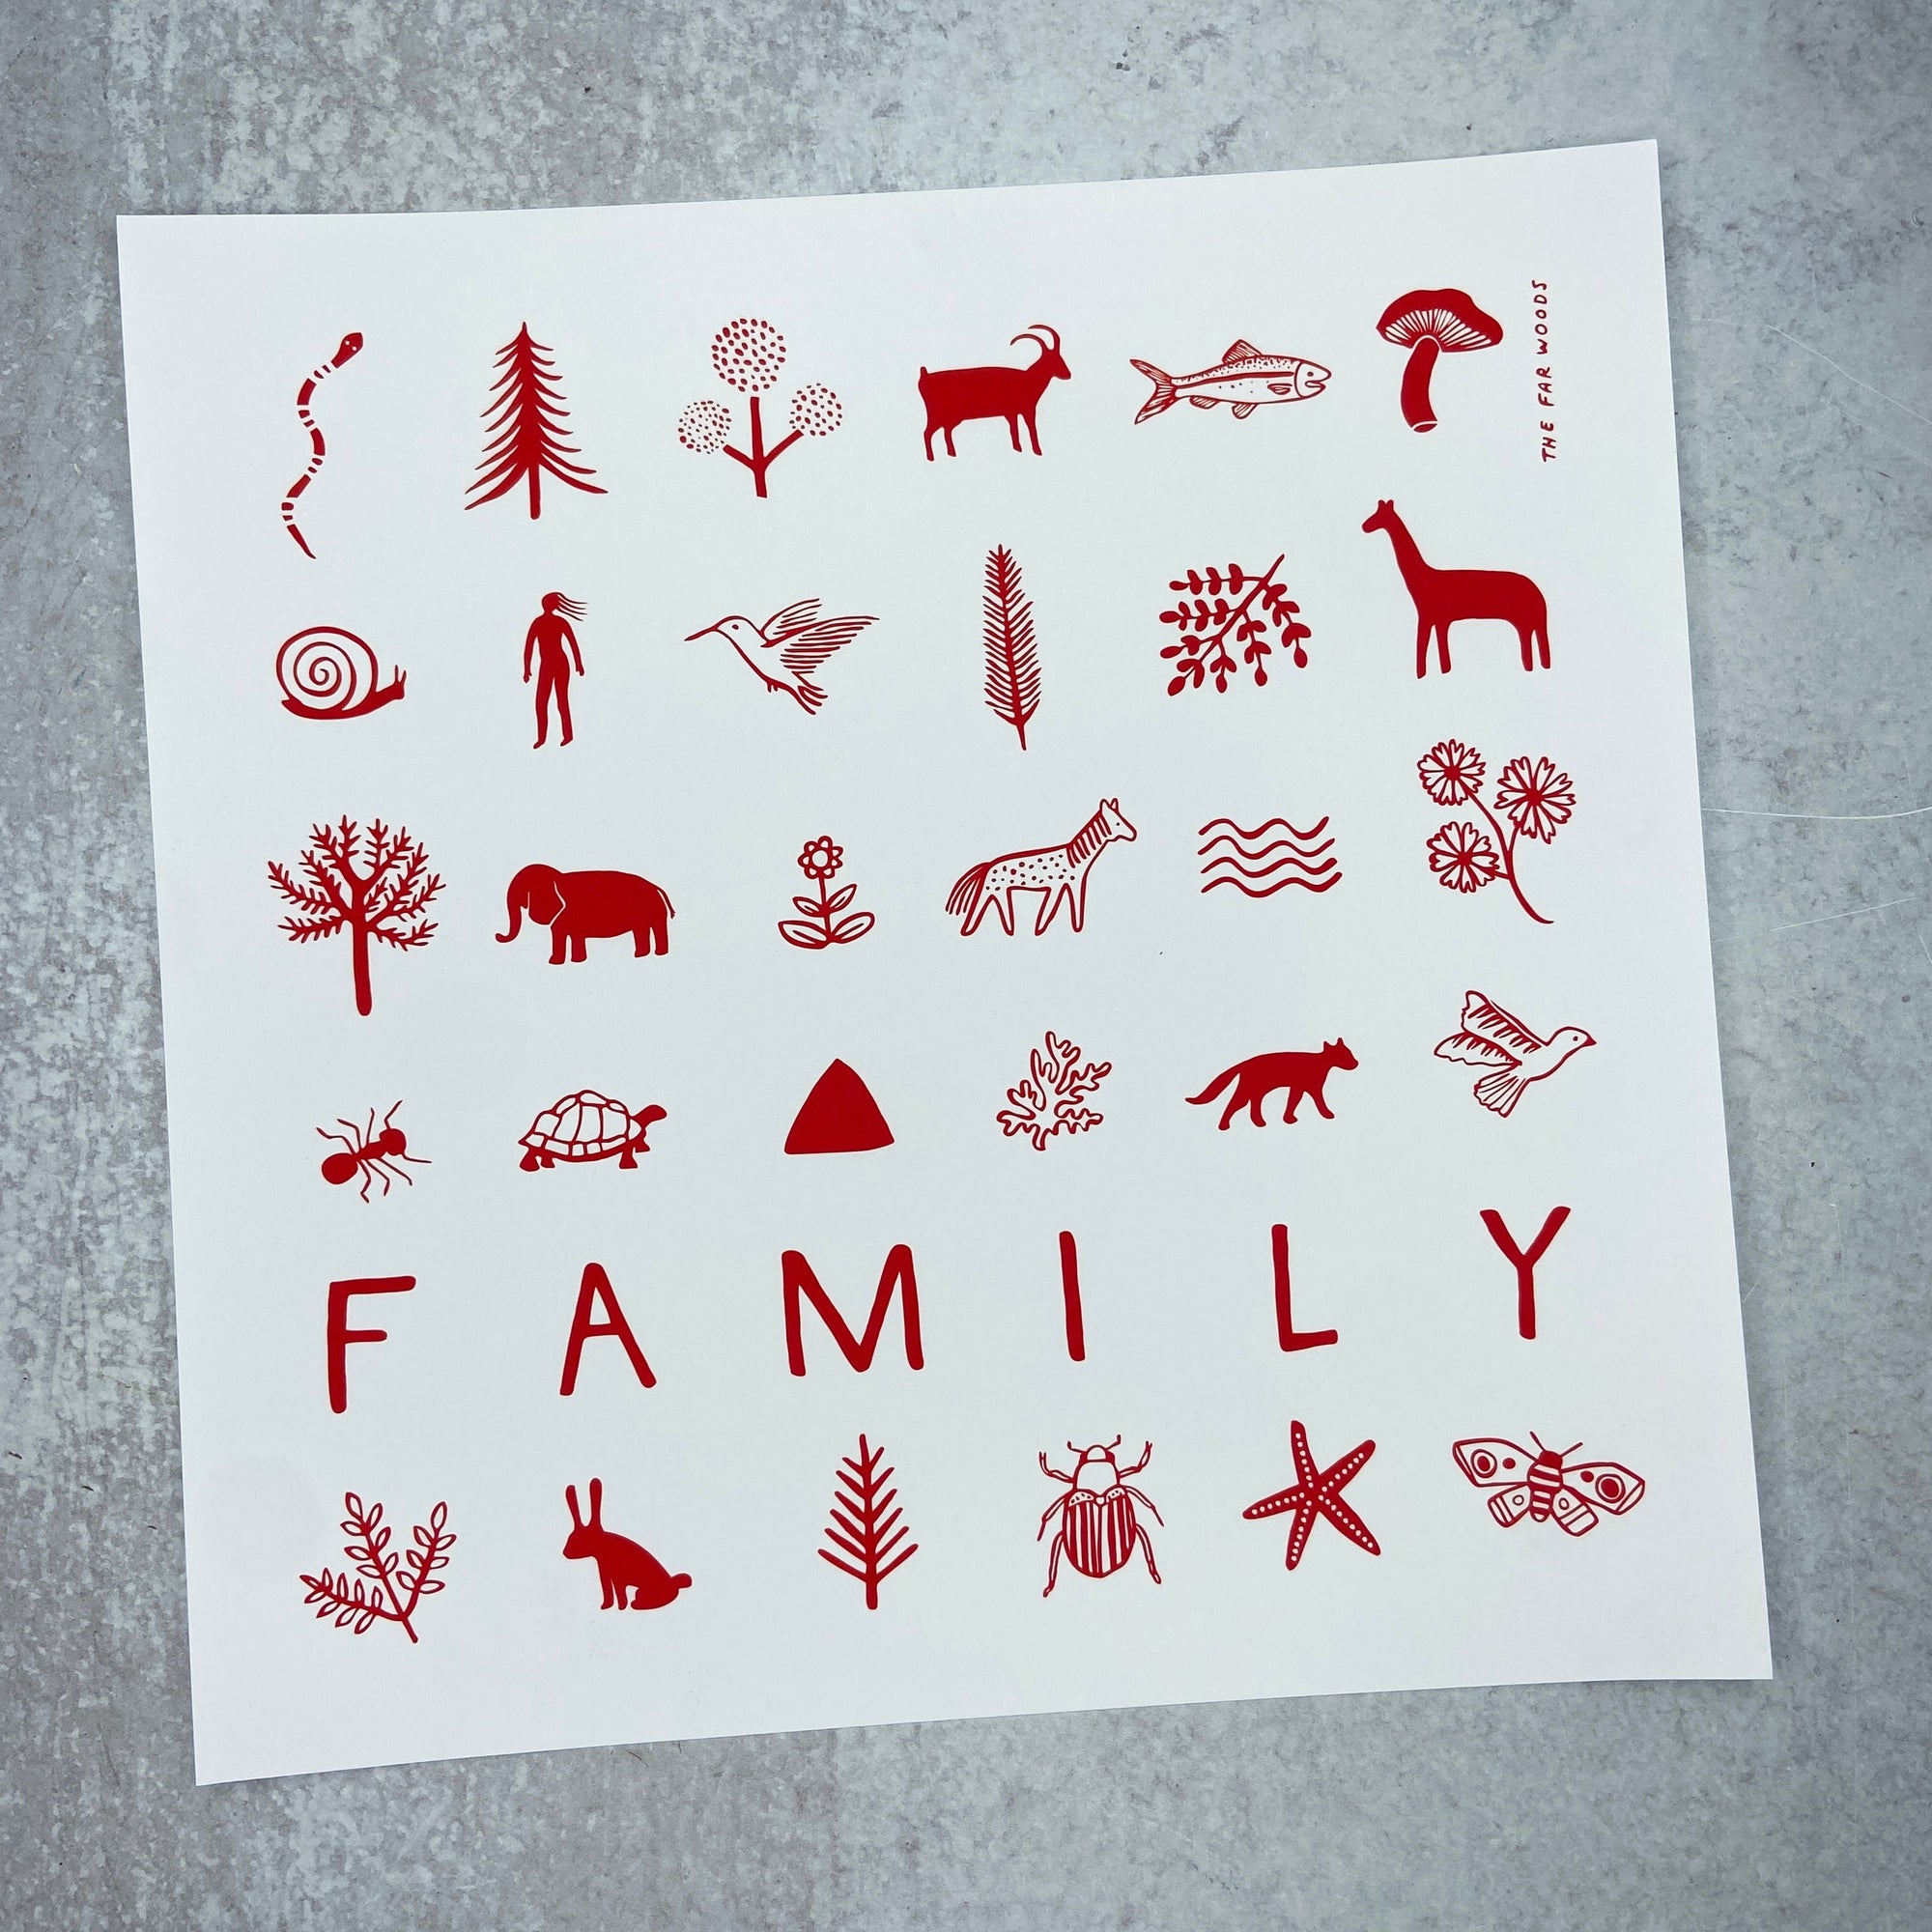 Family - Print